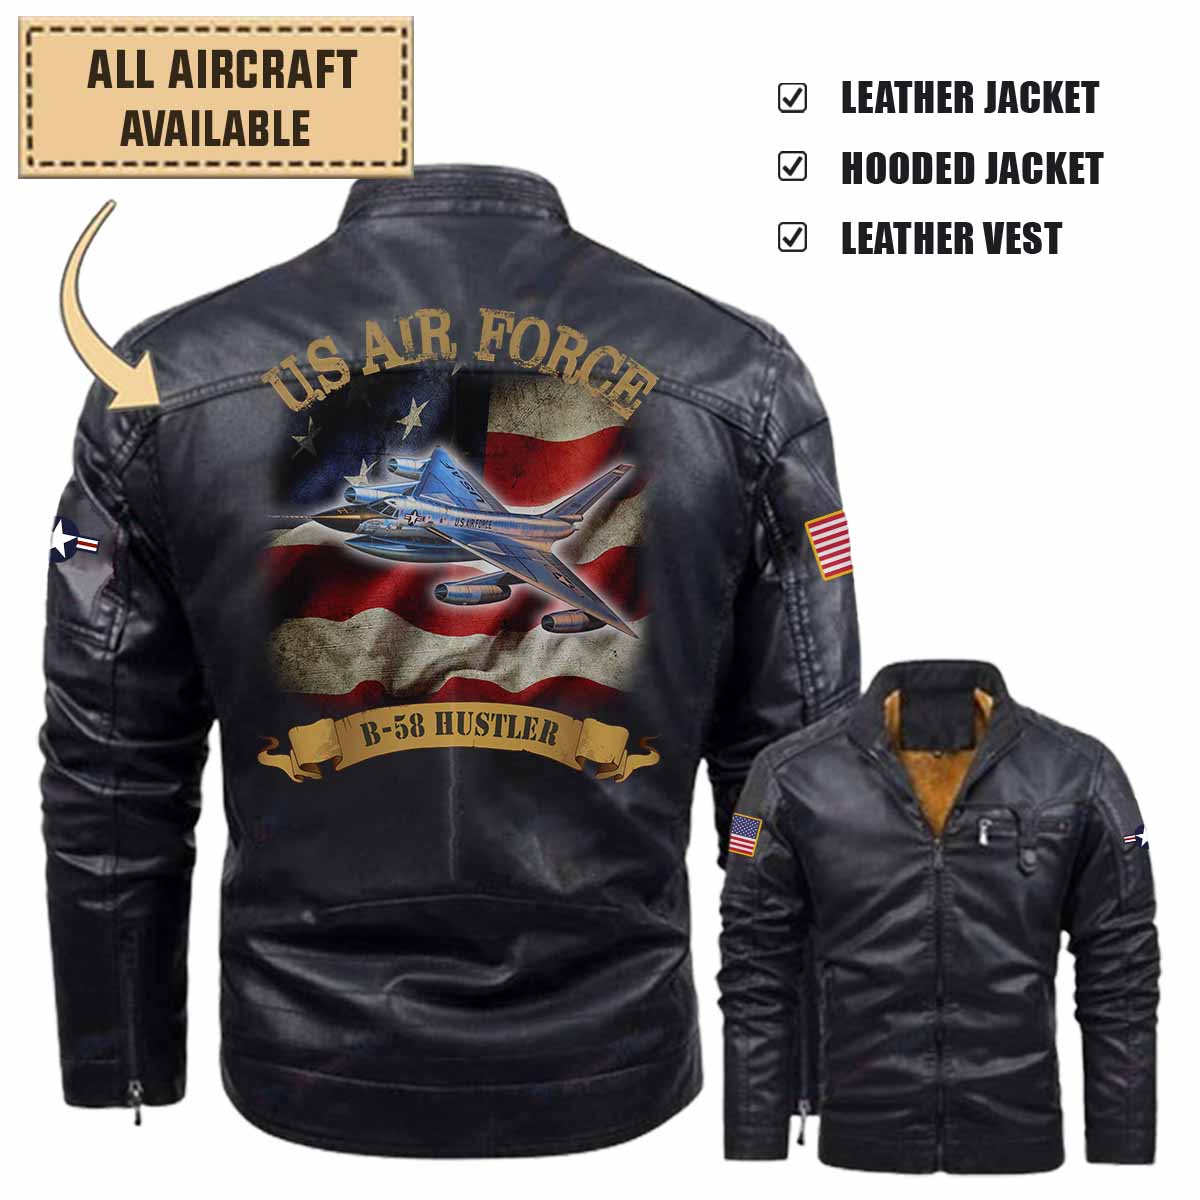 b 58 hustler b58 usafaircraft leather jacket and vest ft1p0